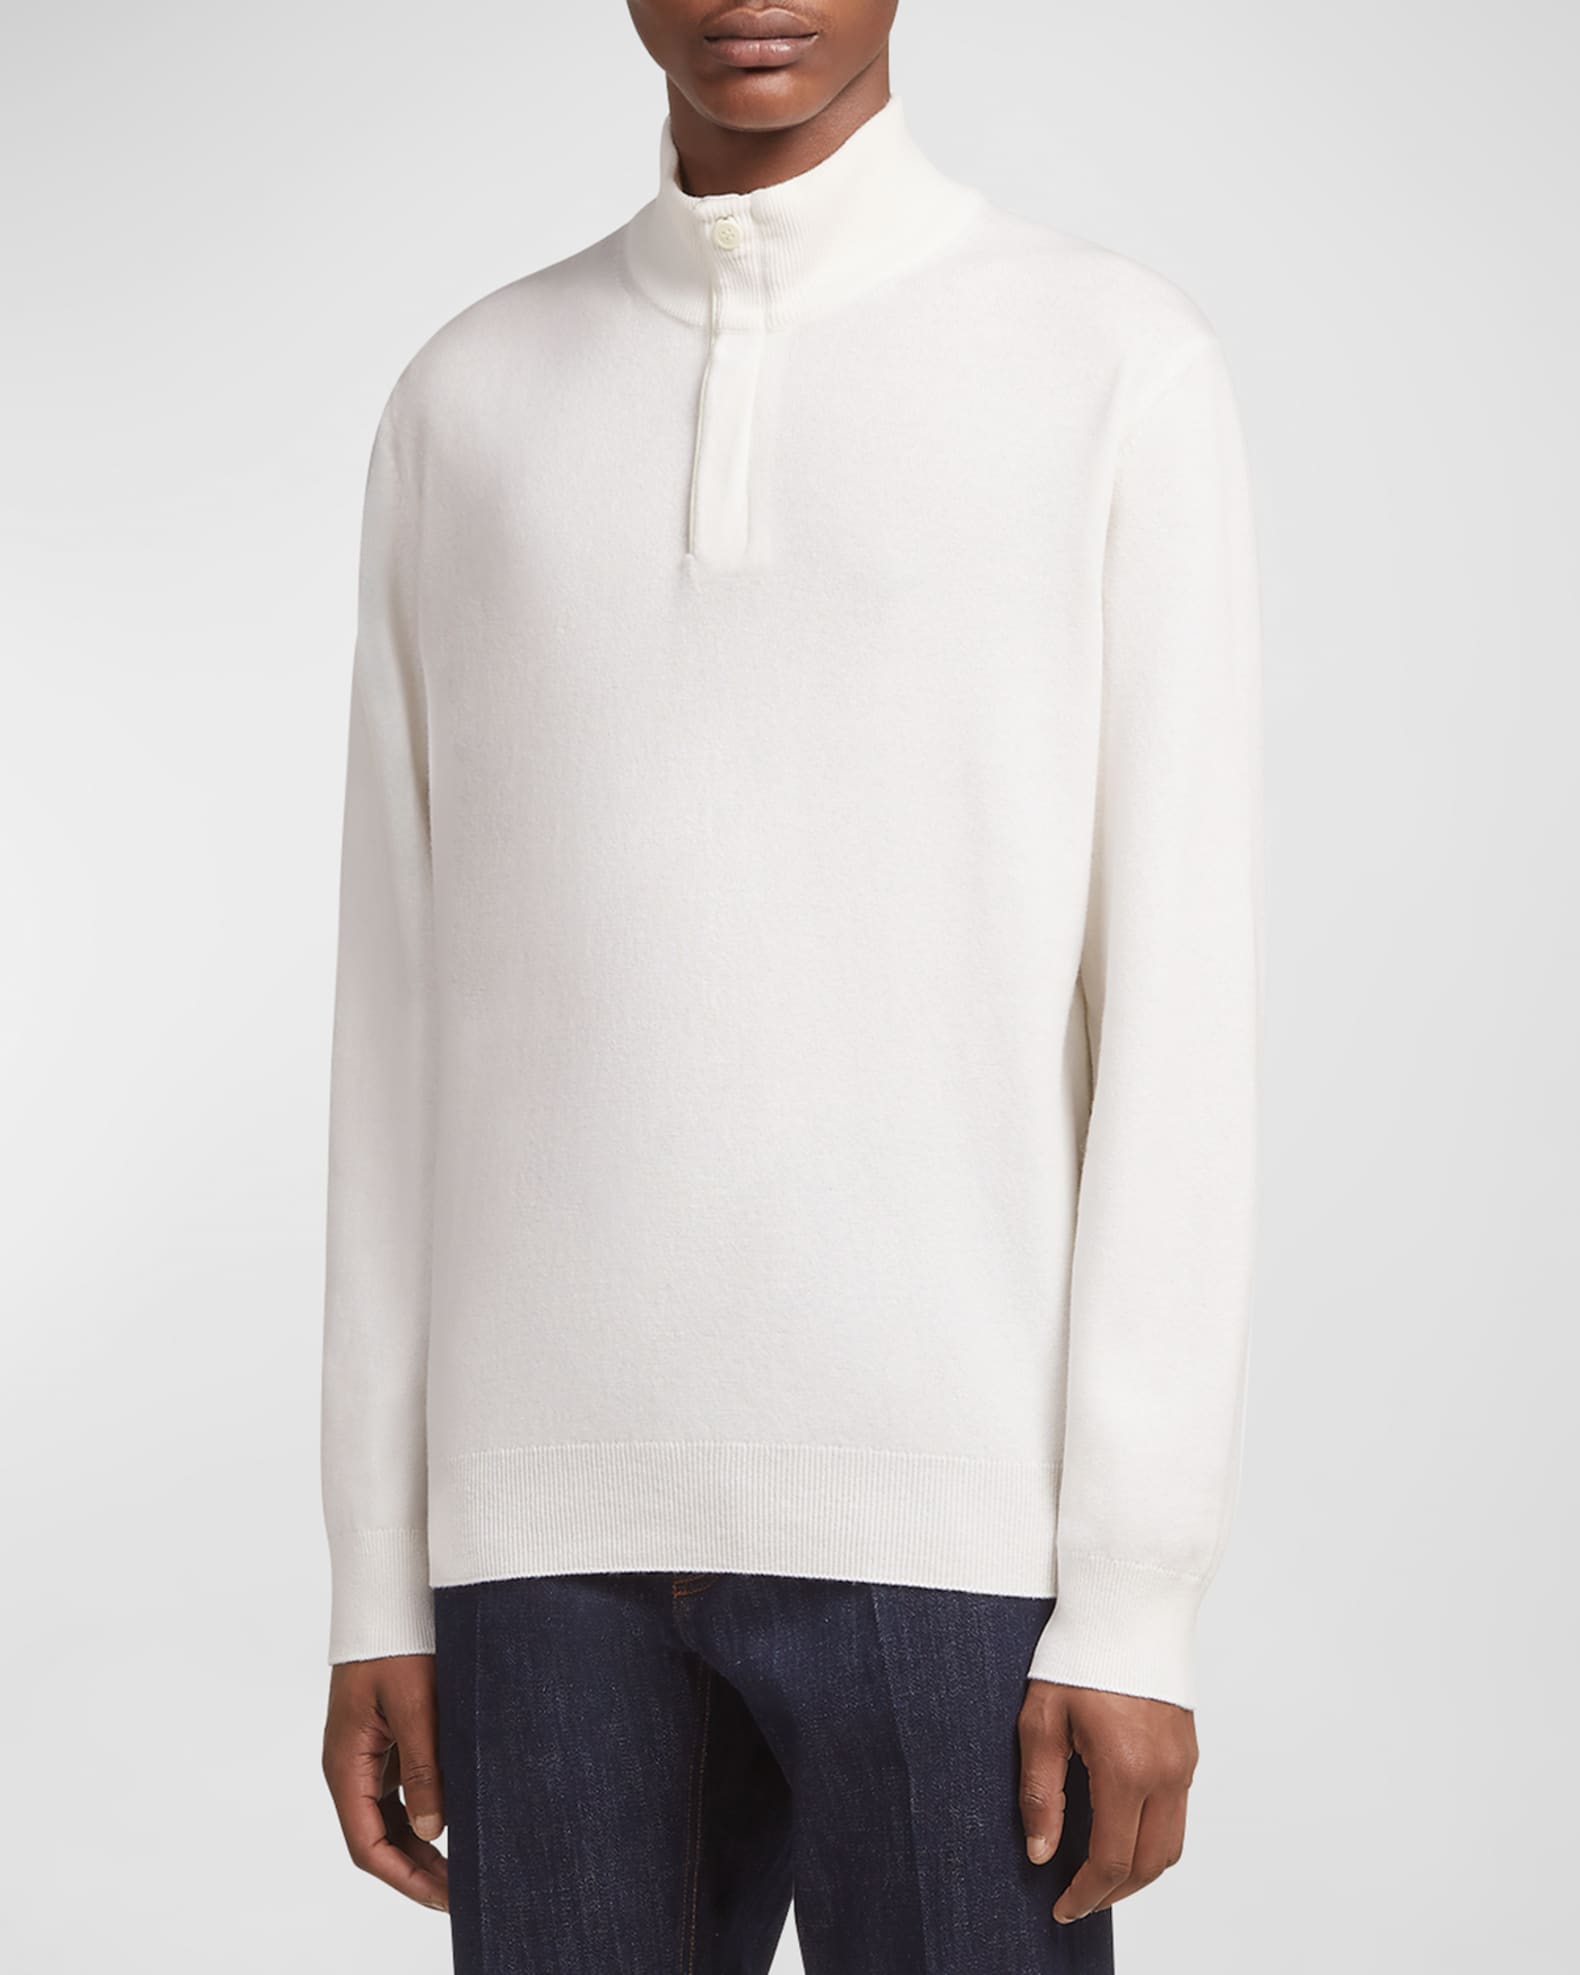 ZEGNA Men's Oasi Cashmere Zip Mock Neck Sweater | Neiman Marcus